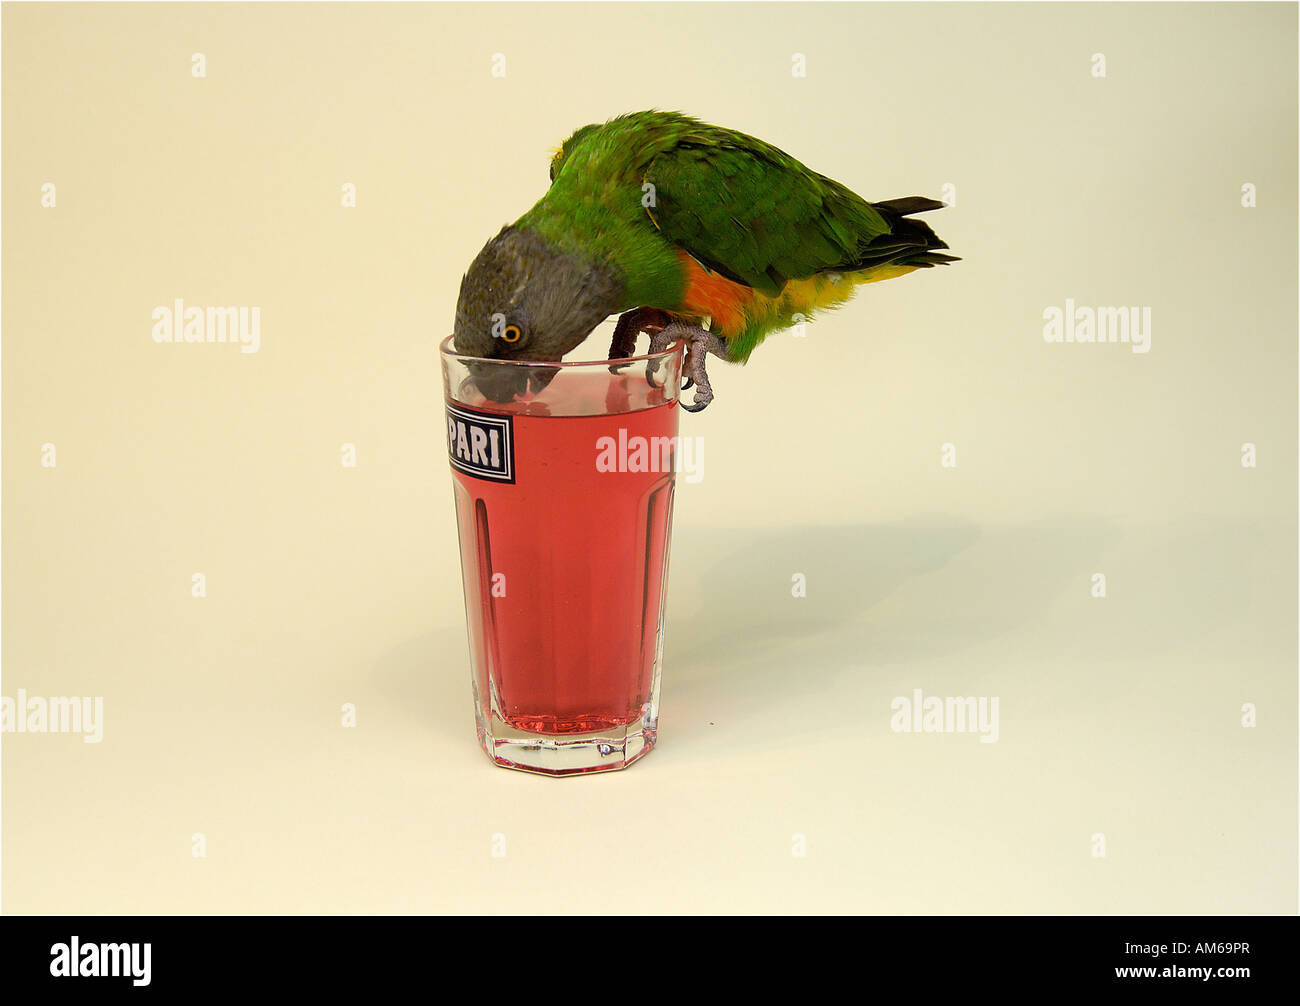 Parrot Poicephalus senegalus is drinking campari Stock Photo